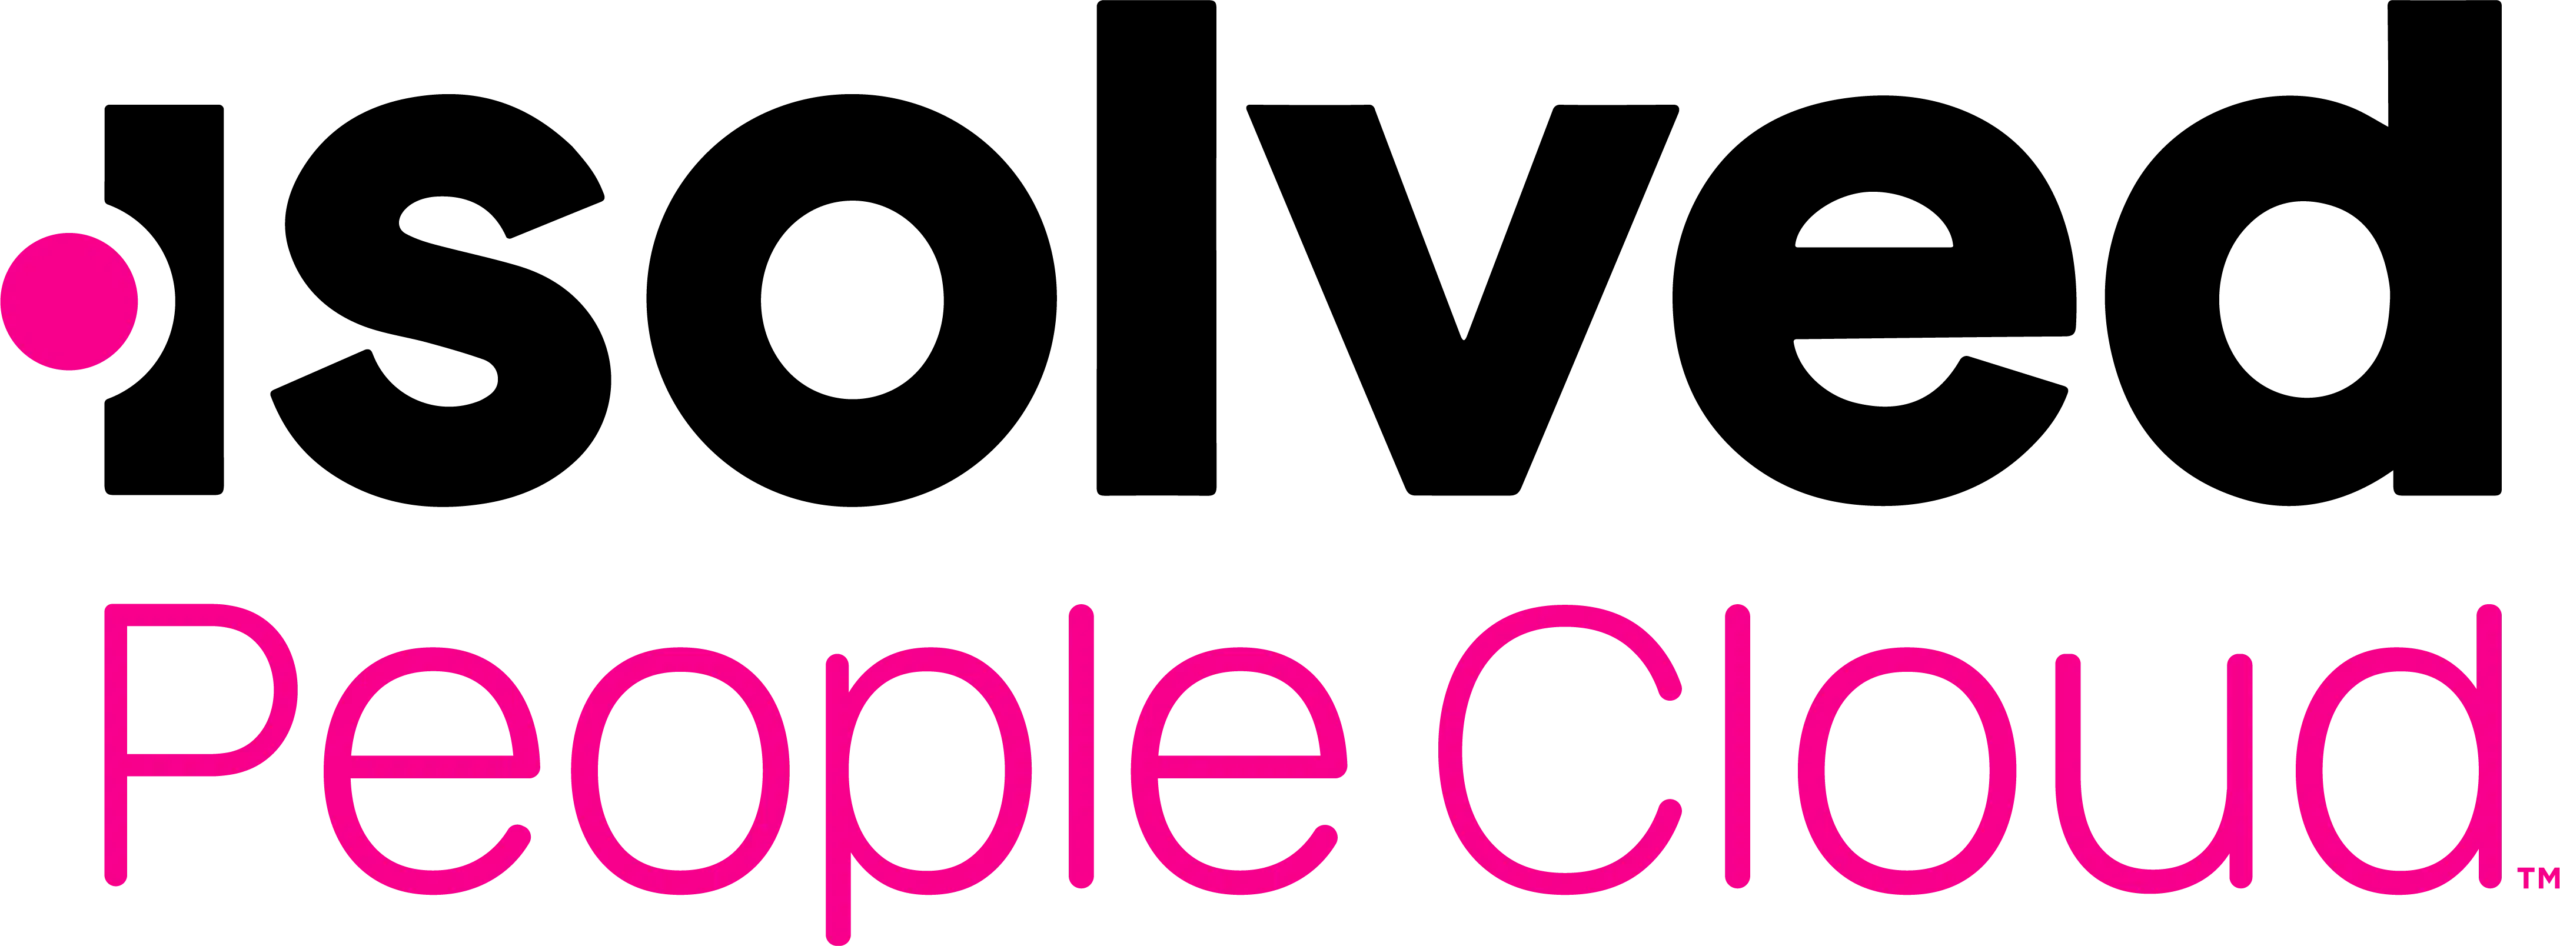 isolvedpc-logo-color-pos-rgb